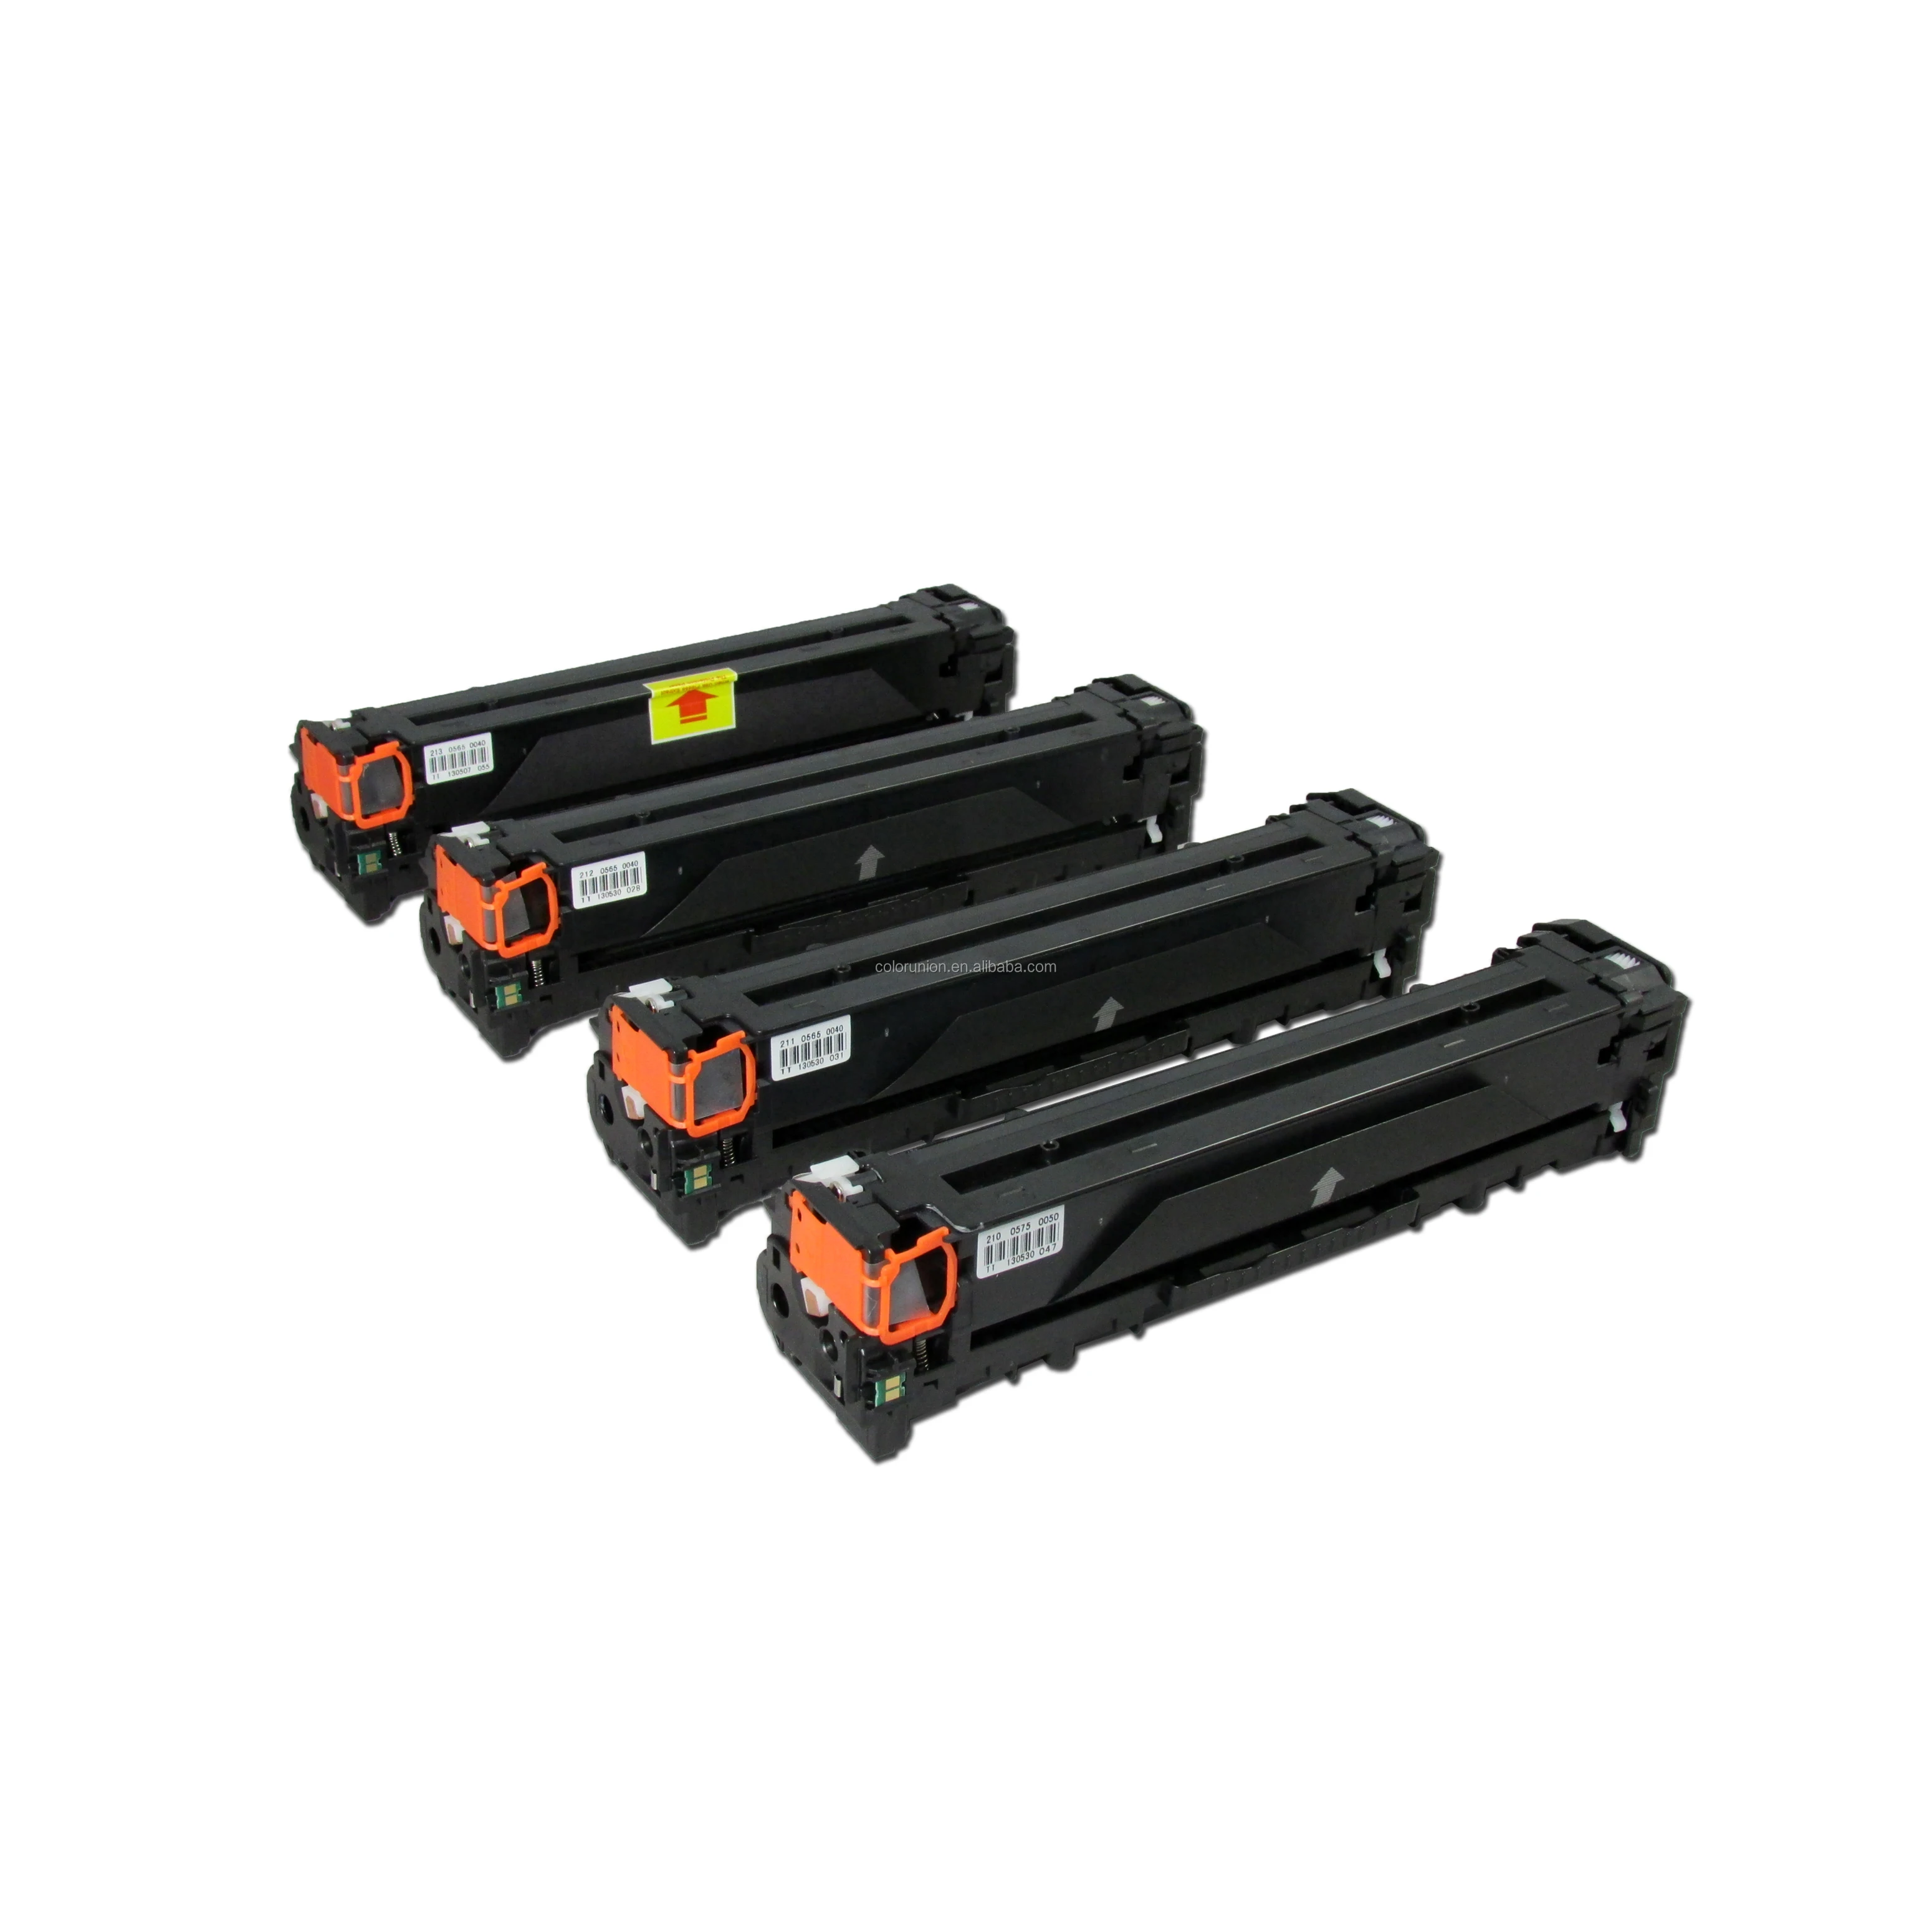 Best selling premium laser toner cartridge supplier 131A